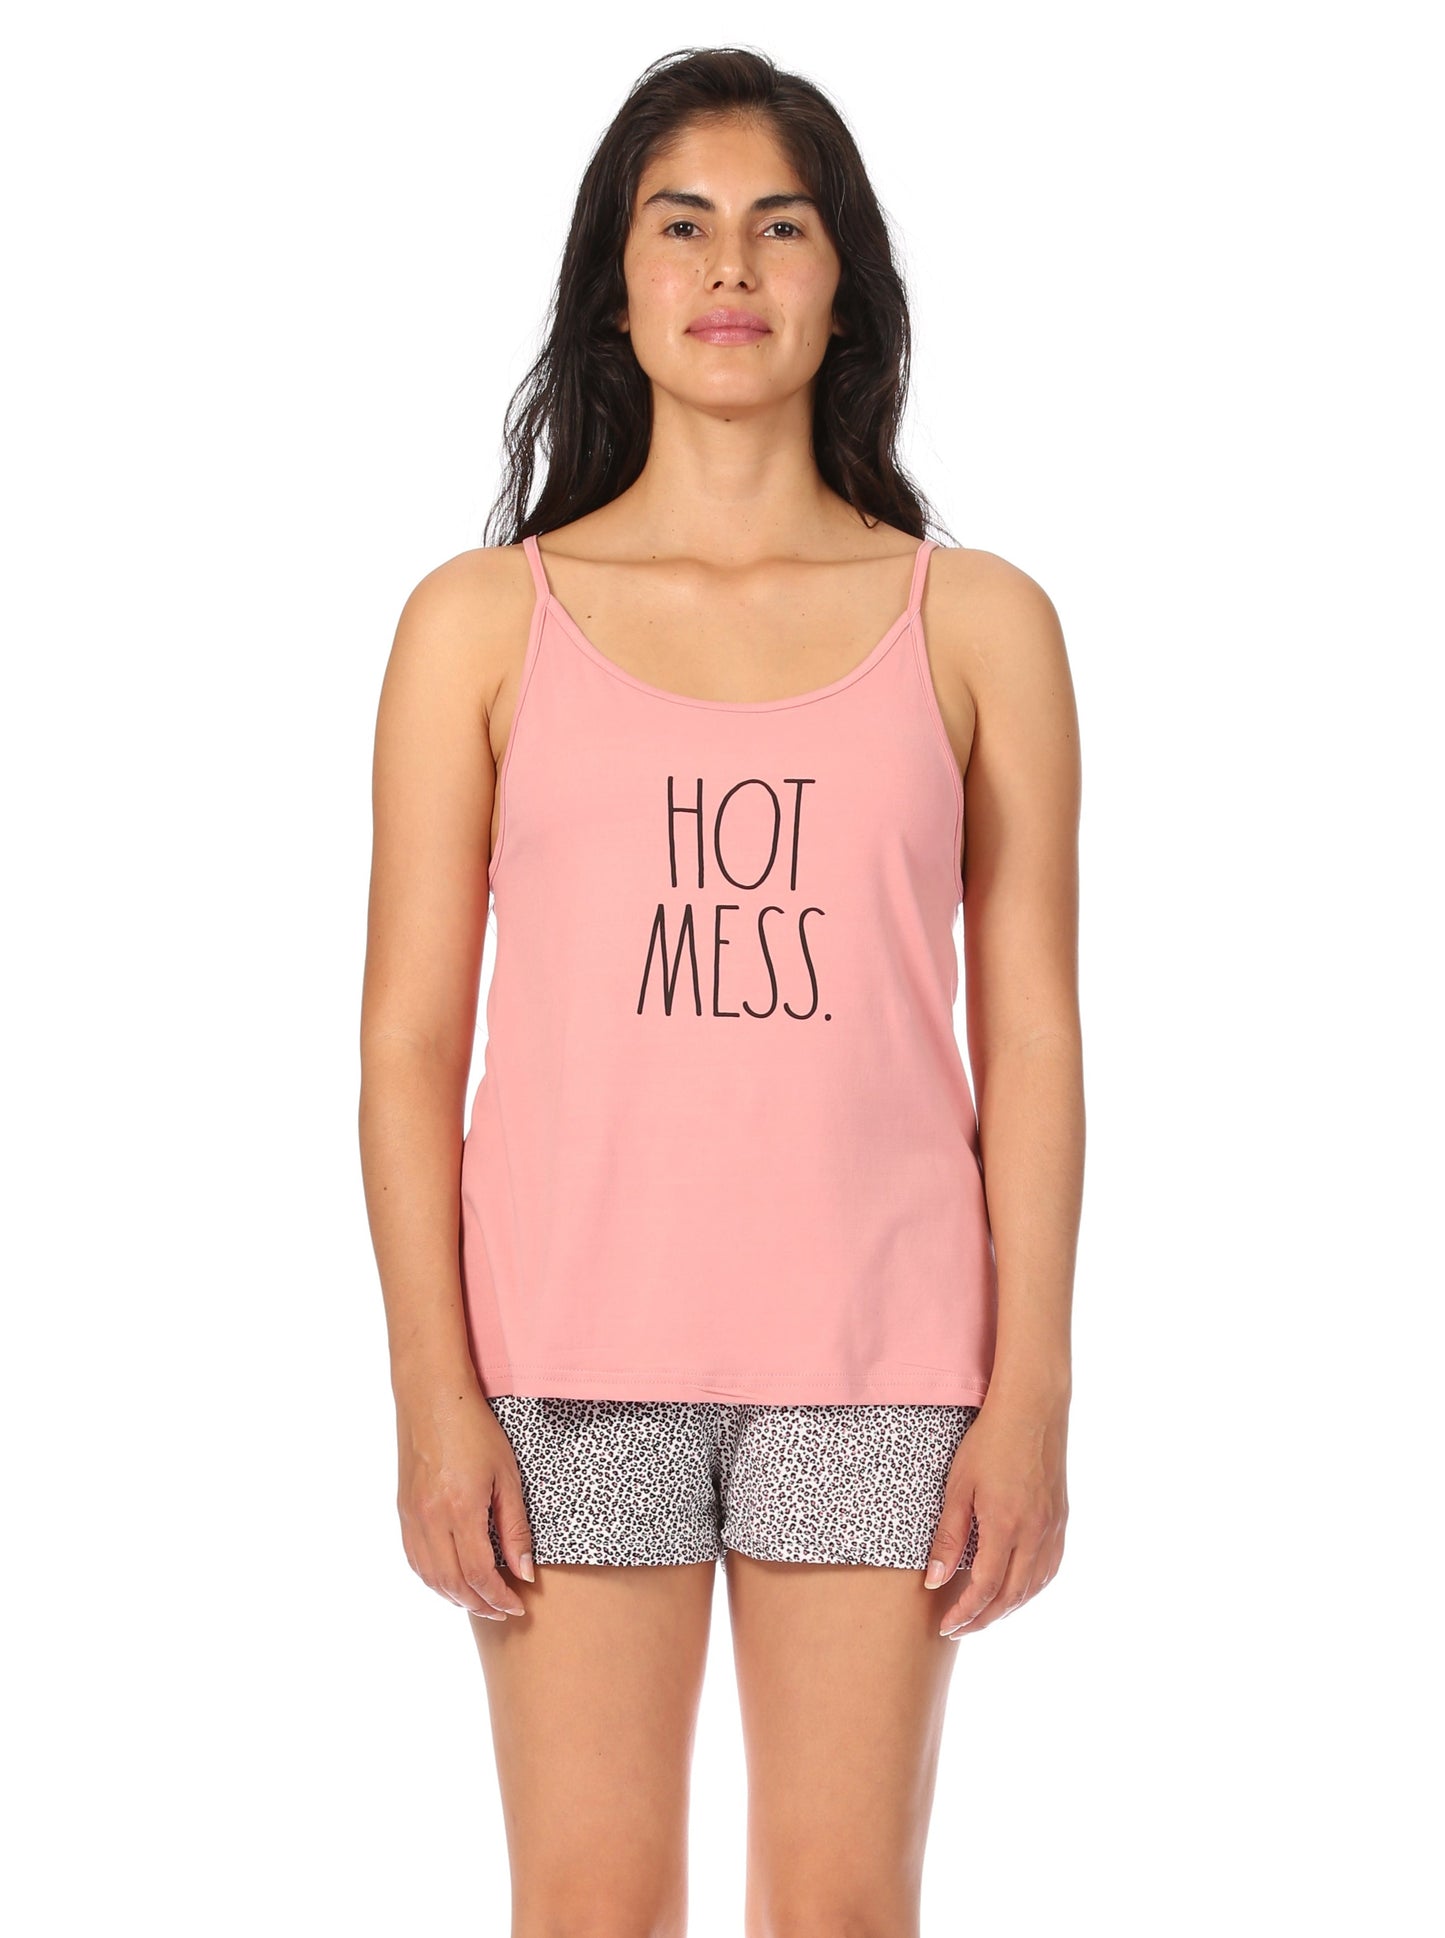 Women's "HOT MESS" Strappy Cami and Elastic Waistband Shorts Pajama Set - Rae Dunn Wear - W Shorts Set